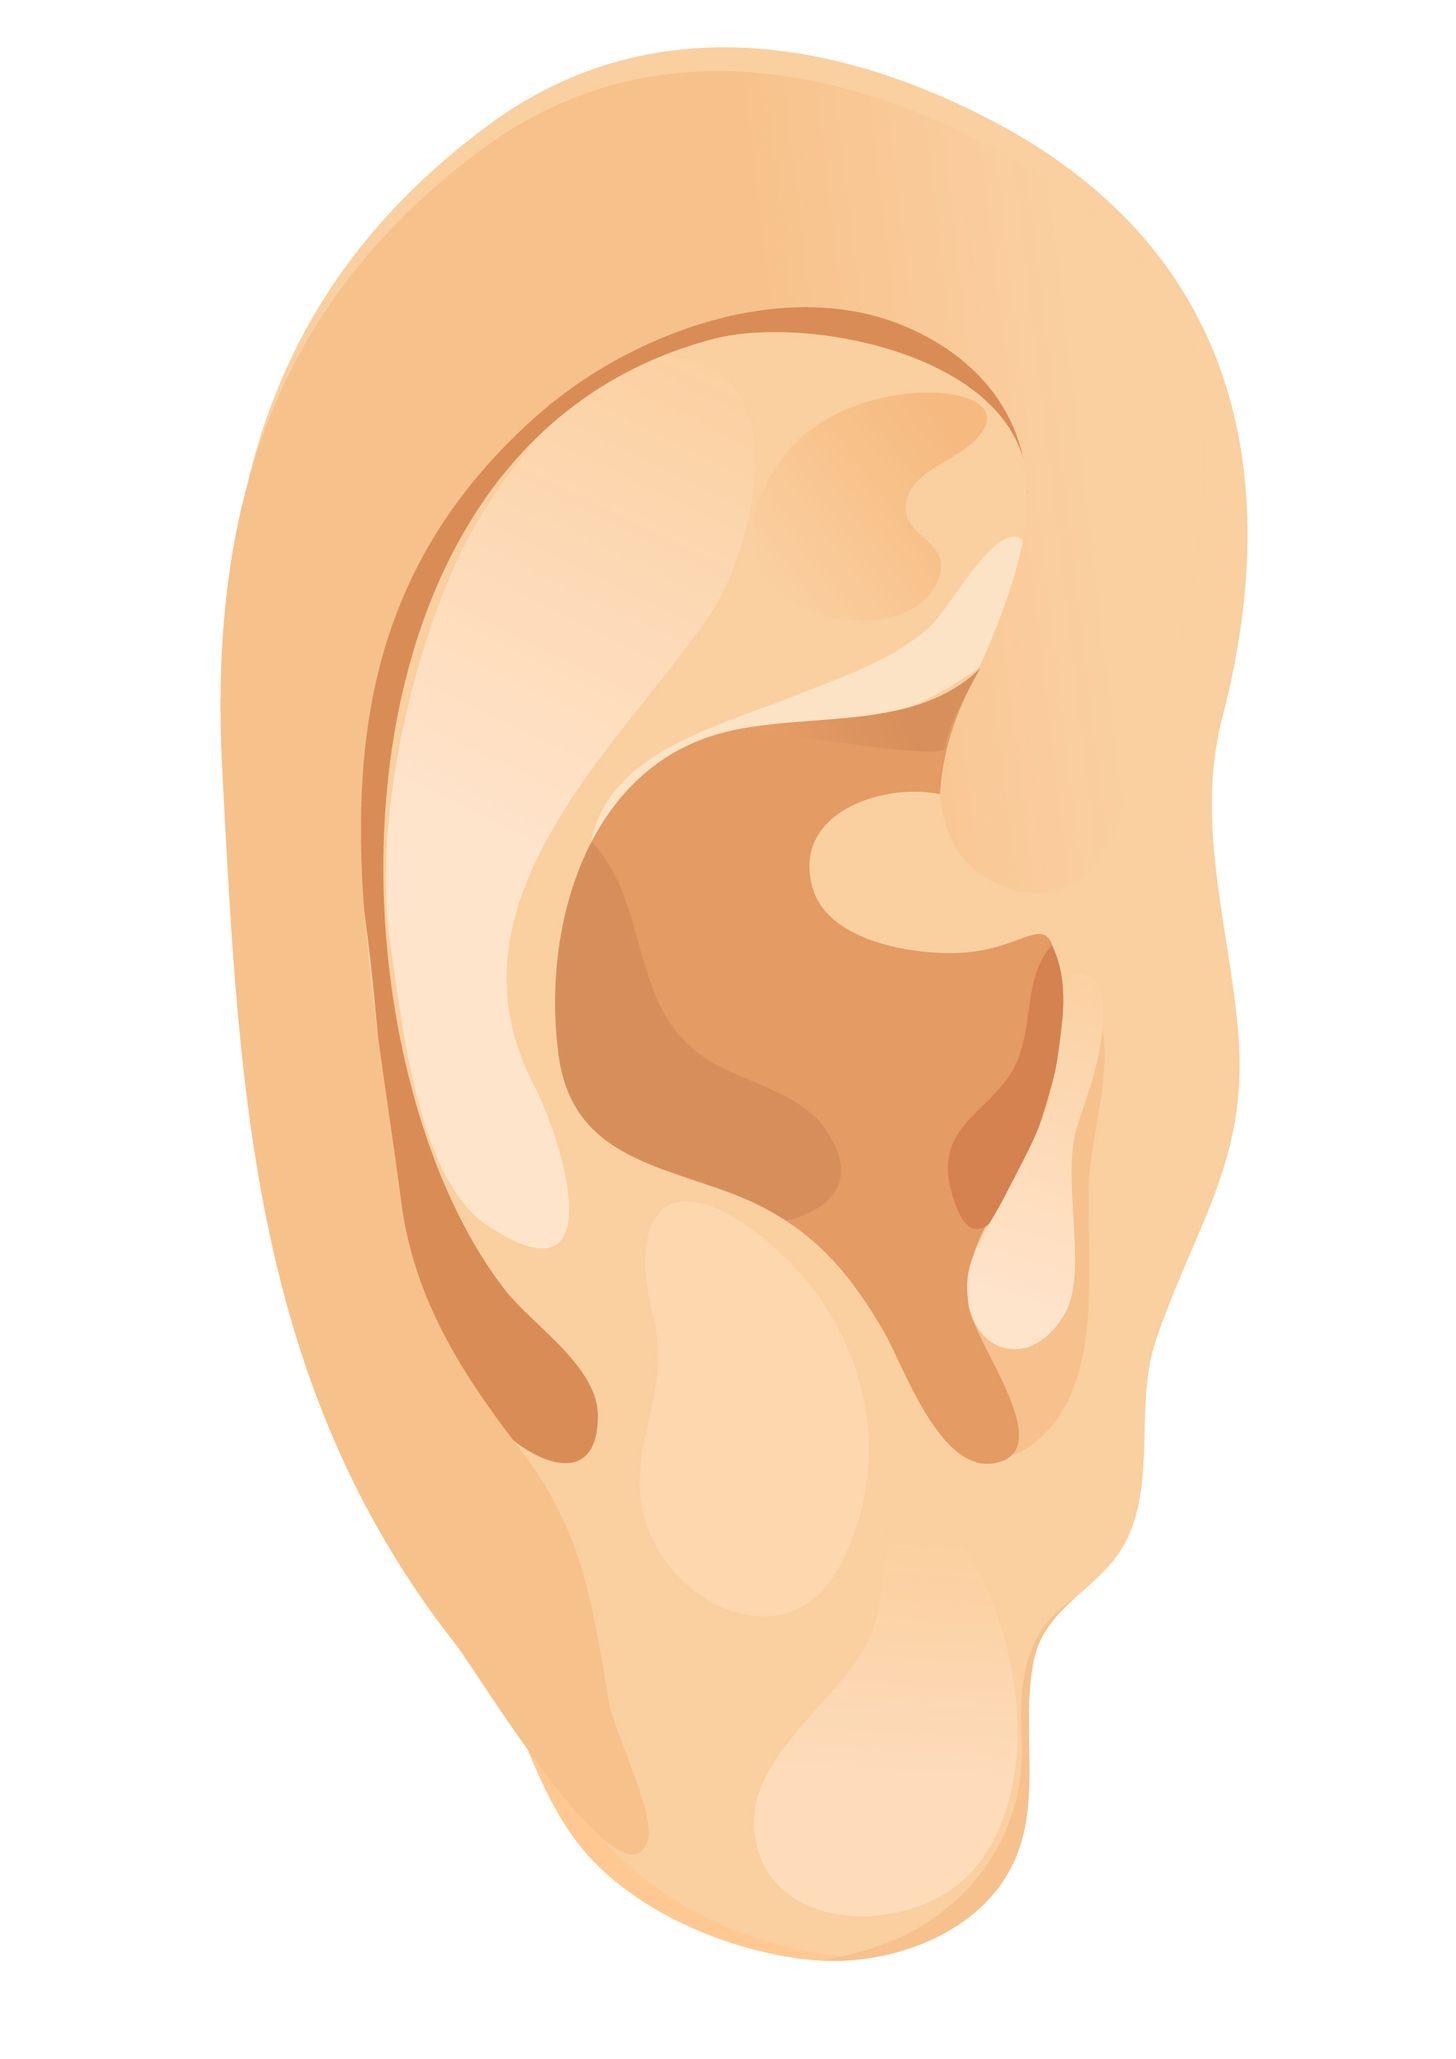 Ear Logo - Ida Institute Sponsors Logo Contest for International Ear Care Day